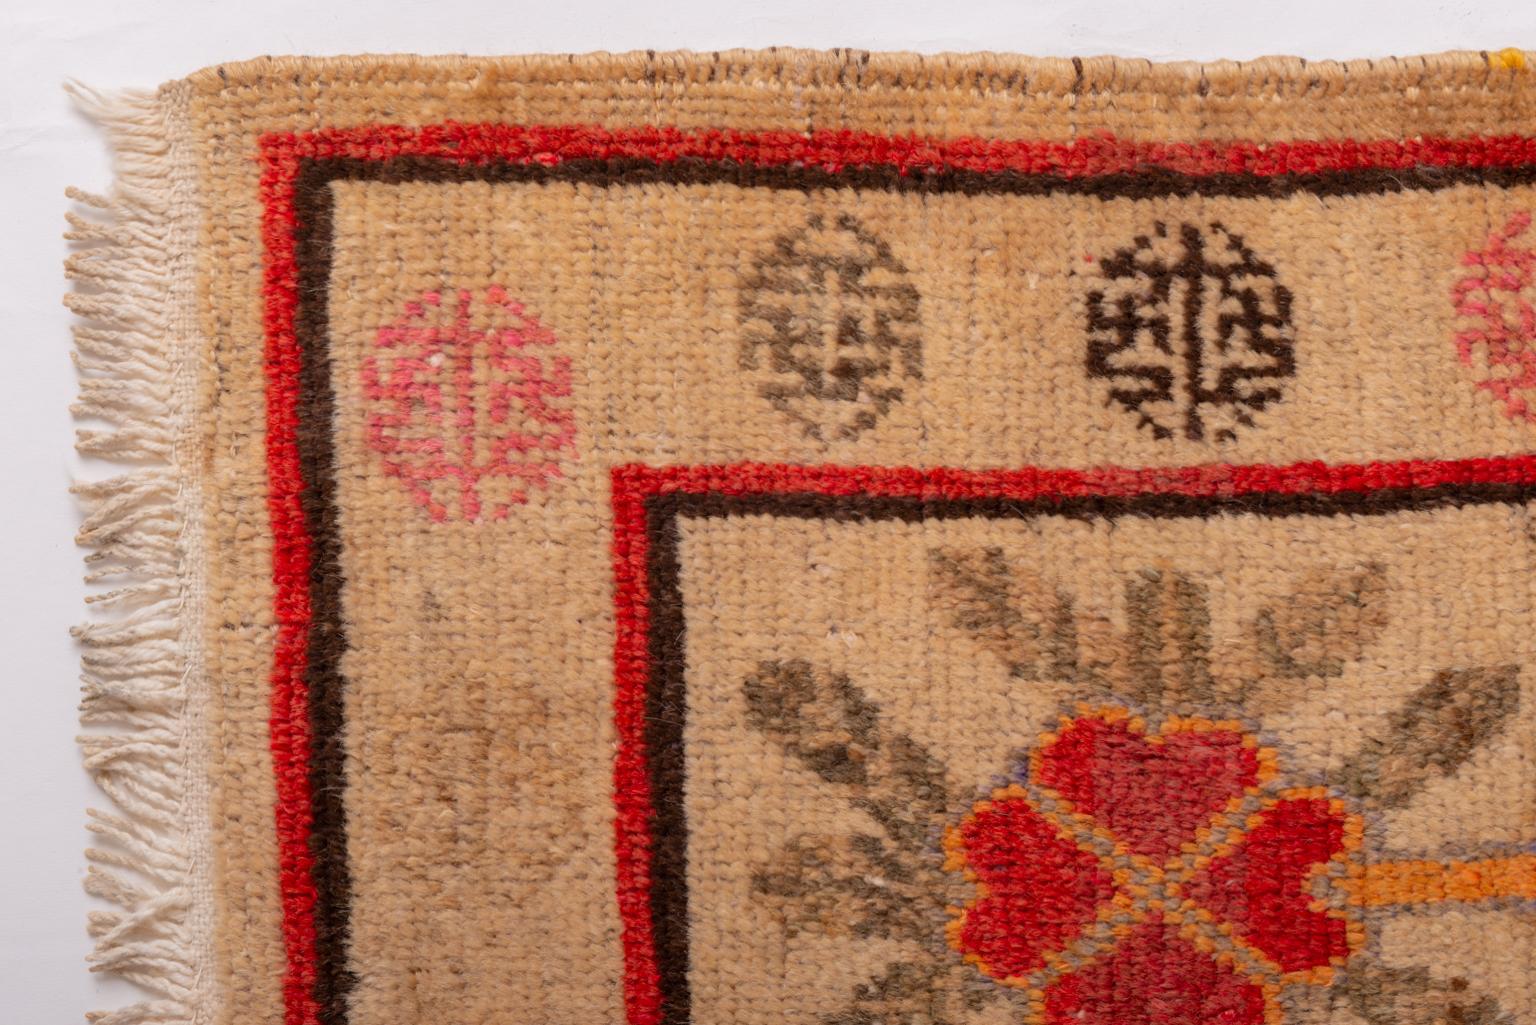 Hand-Knotted Khotan Rug from Samarkanda with Flower Vases